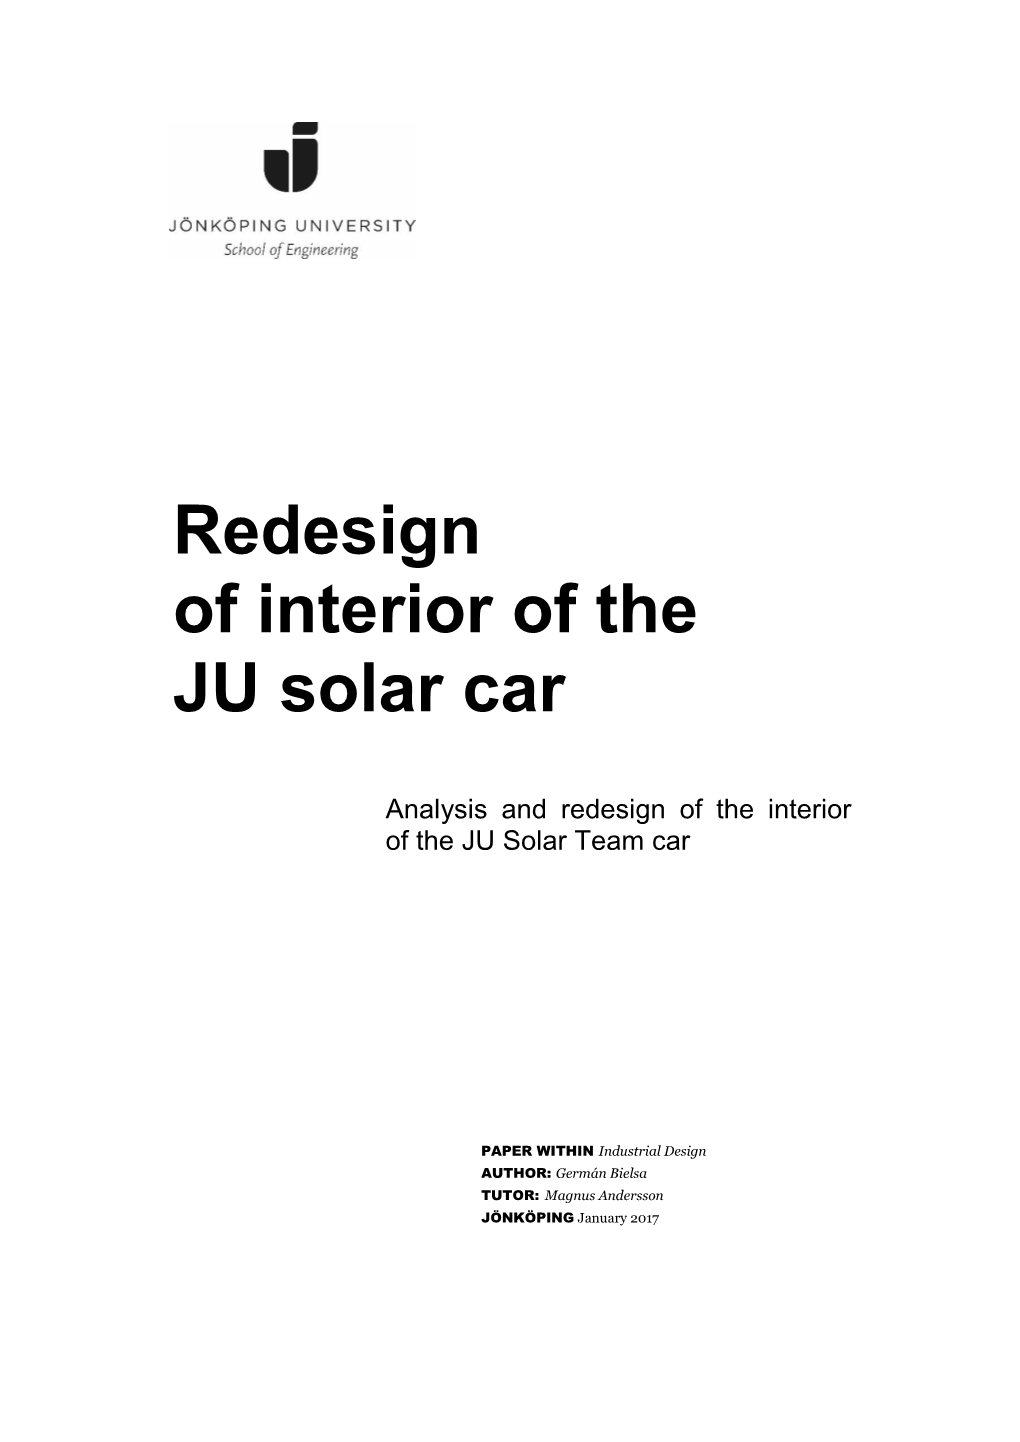 Redesign of Interior of the JU Solar Car Interior Analysis and Redesign of the Interior of the JU Solar Team Car